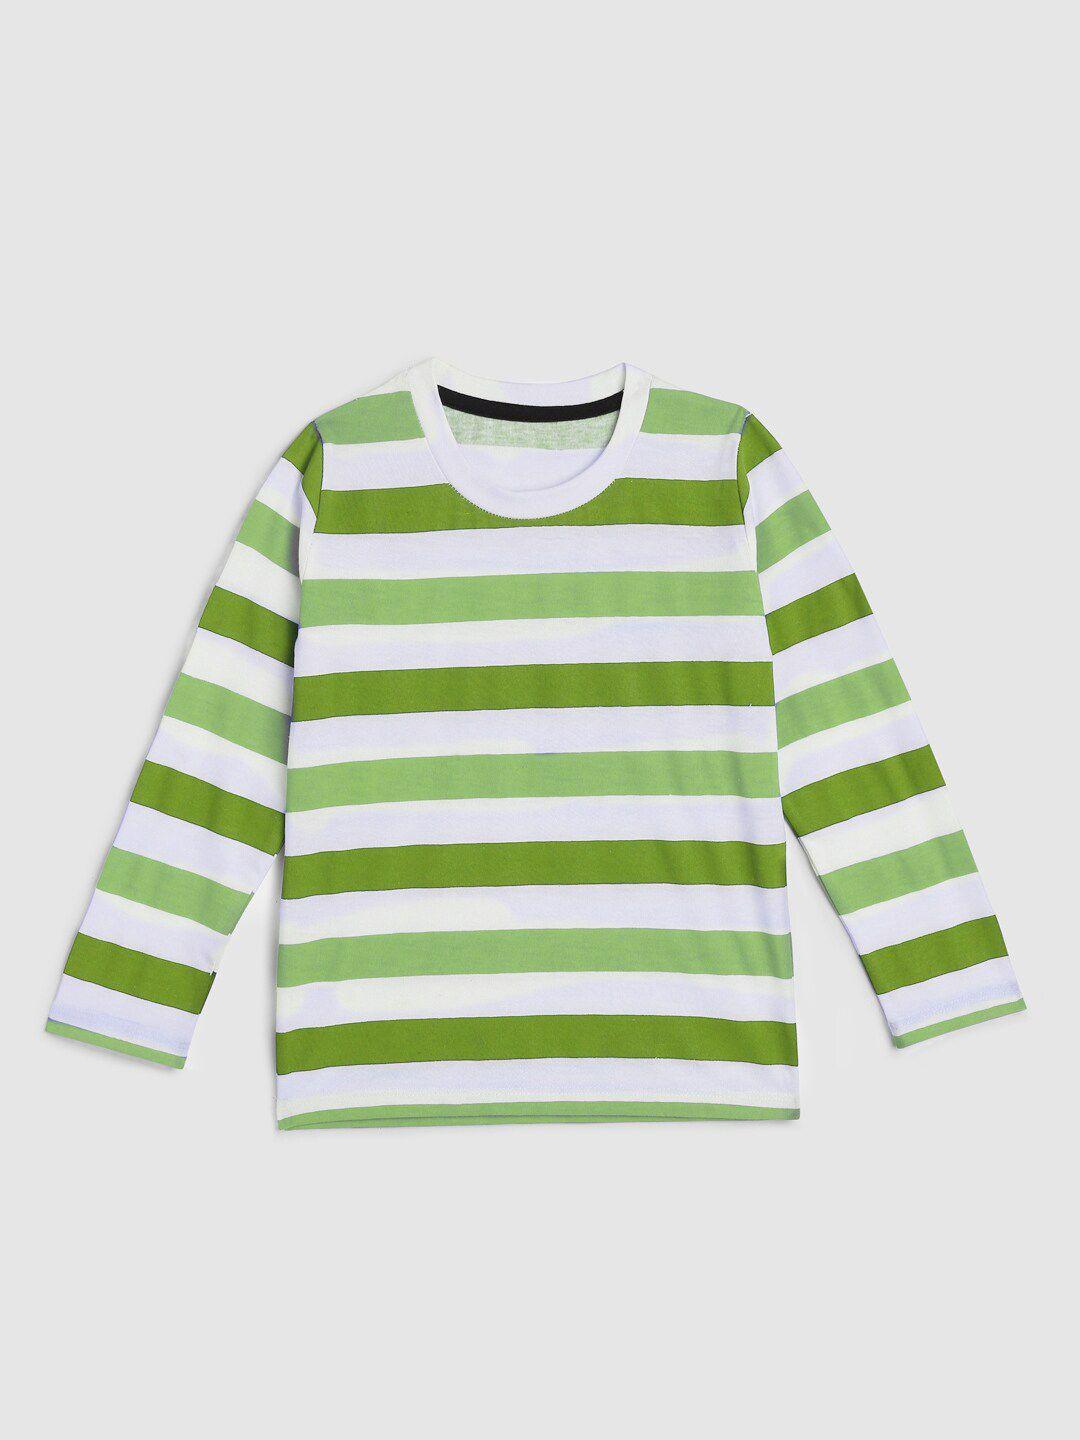 kidscraft boys white & green striped t-shirt